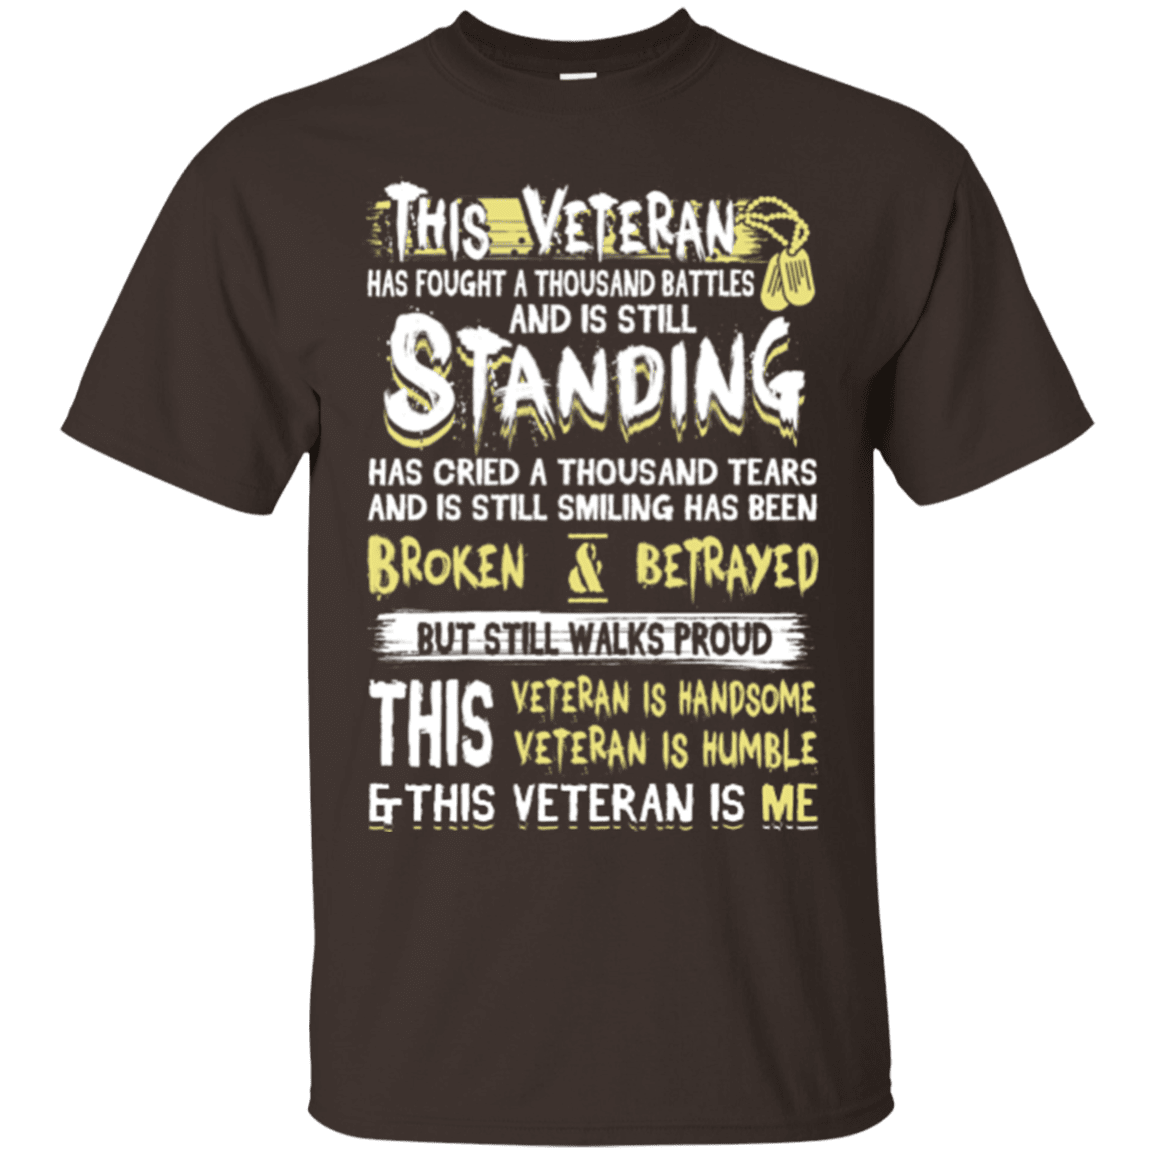 Military T-Shirt "This Veteran Standing Cried and Smiling Broken & Betrayed"-TShirt-General-Veterans Nation